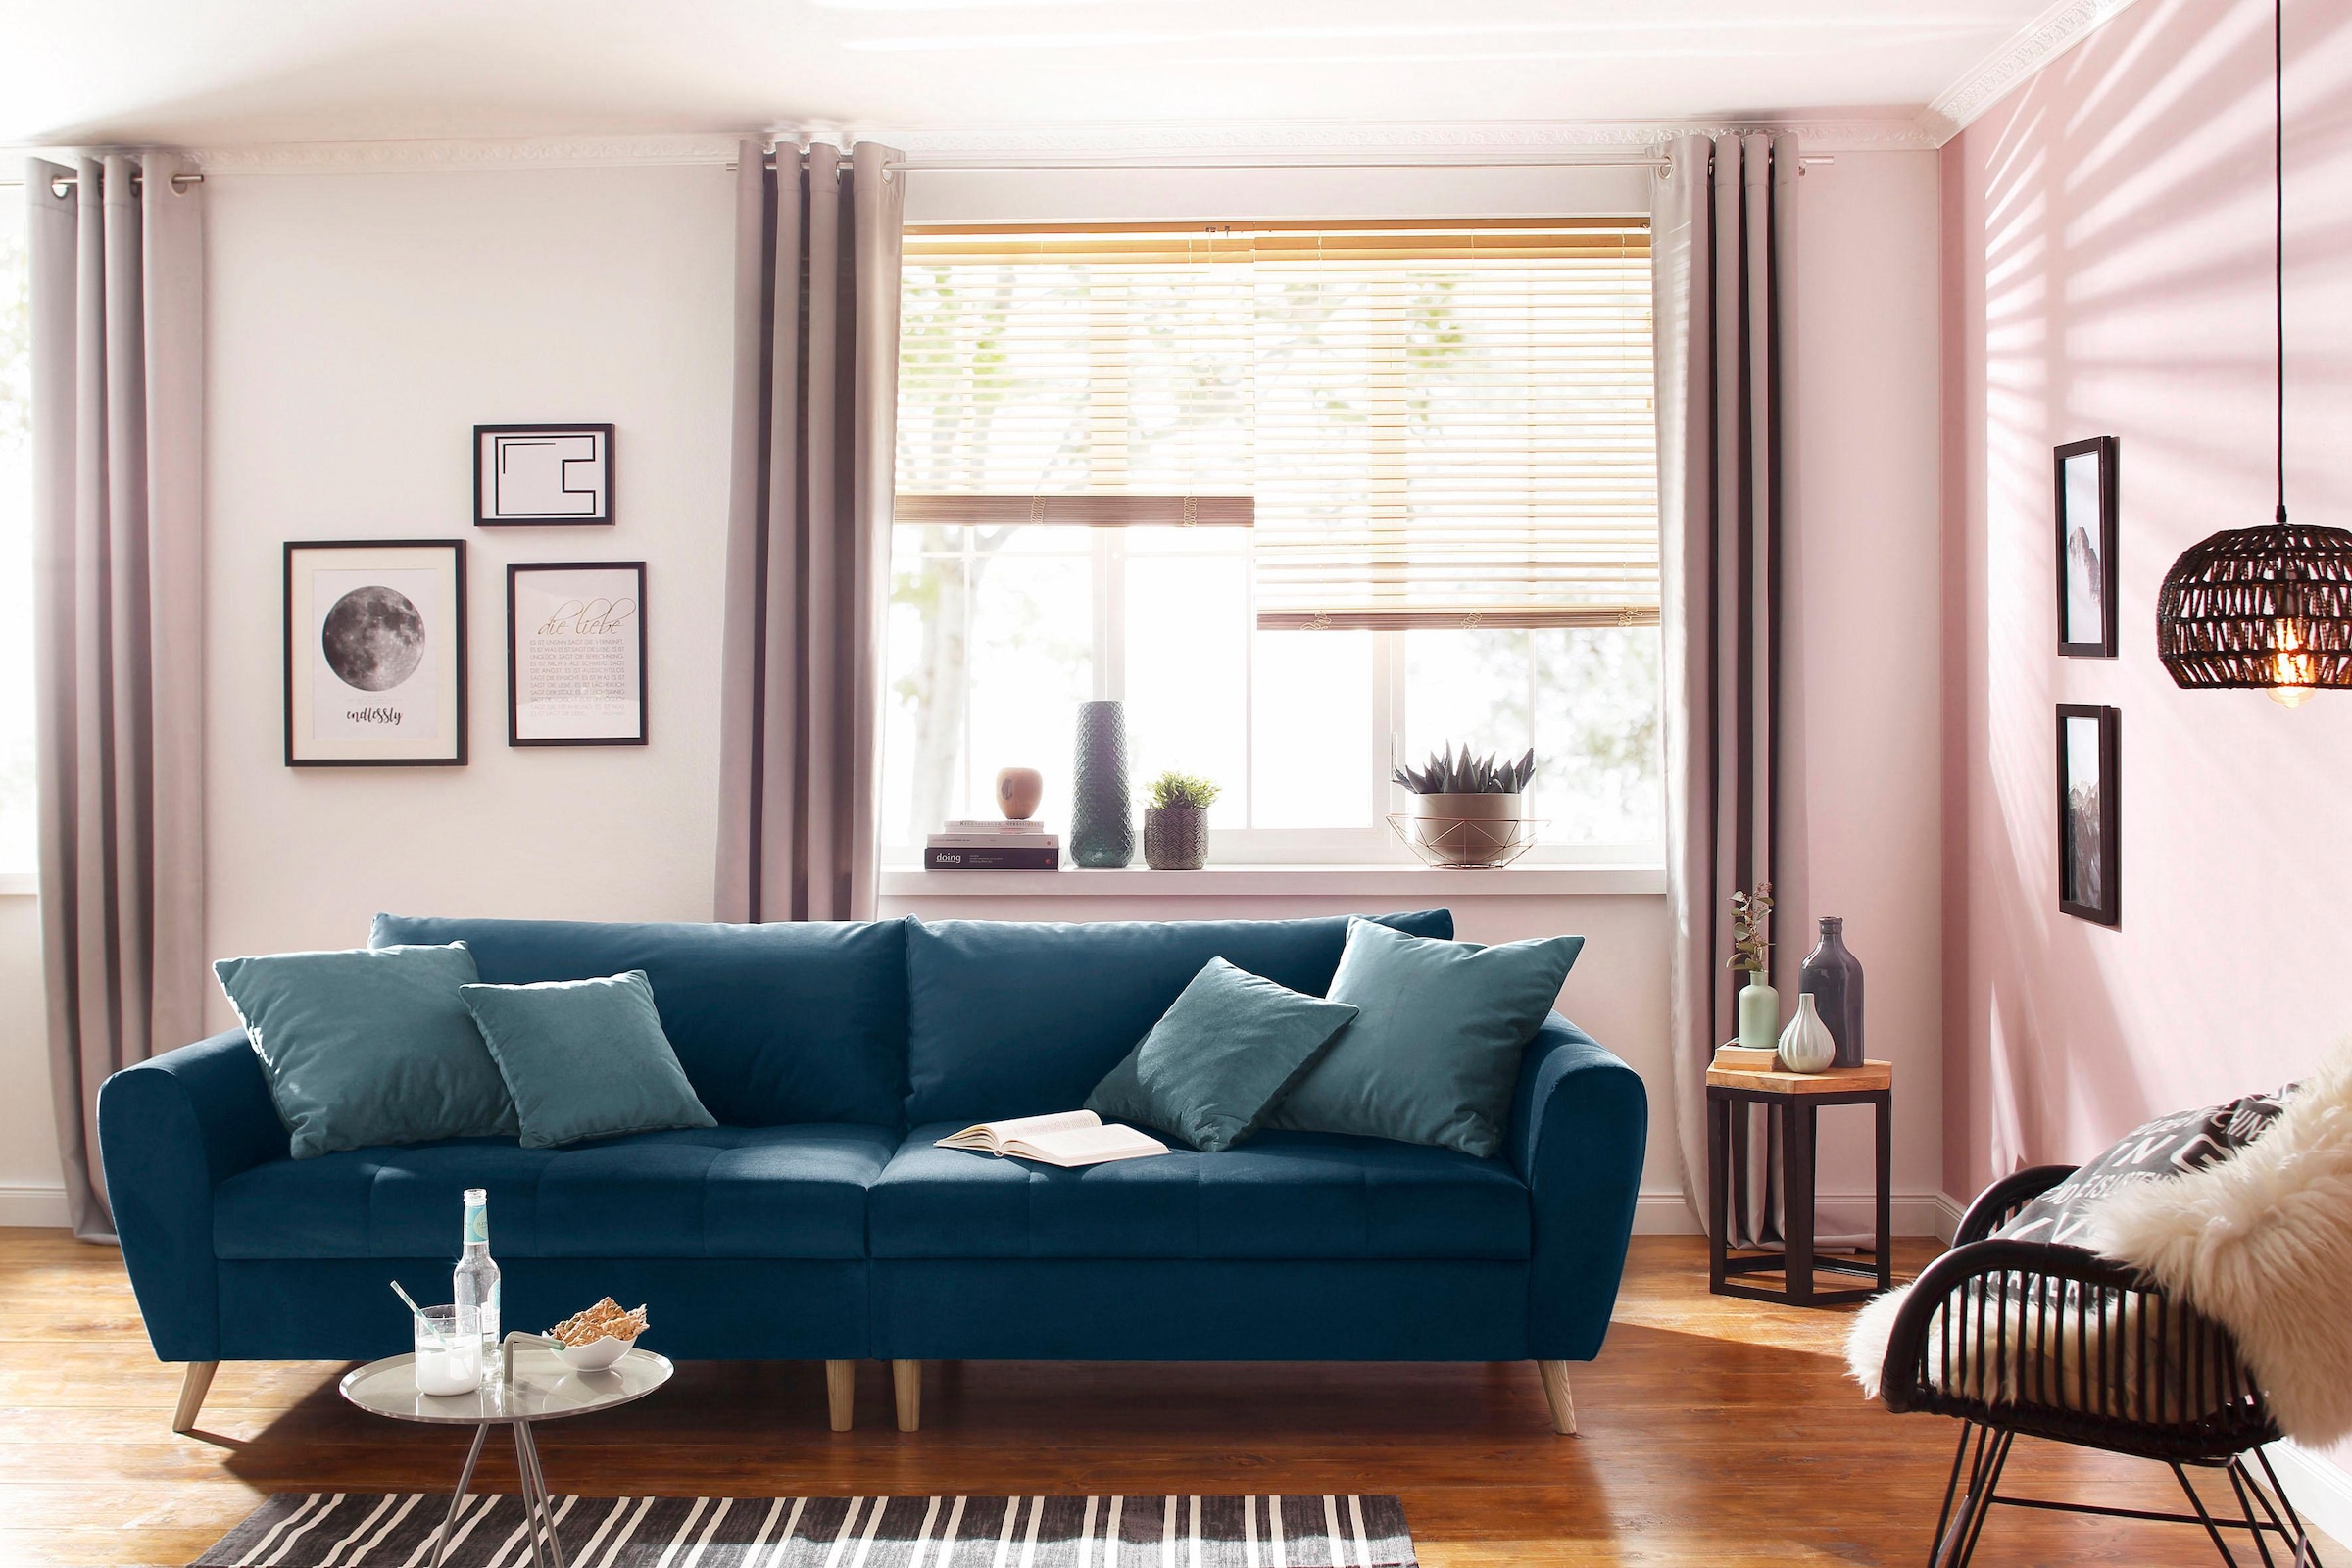 Steppung, affaire bestellen | lose »Penelope«, Big-Sofa feine Design Kissen, skandinavisches Home BAUR